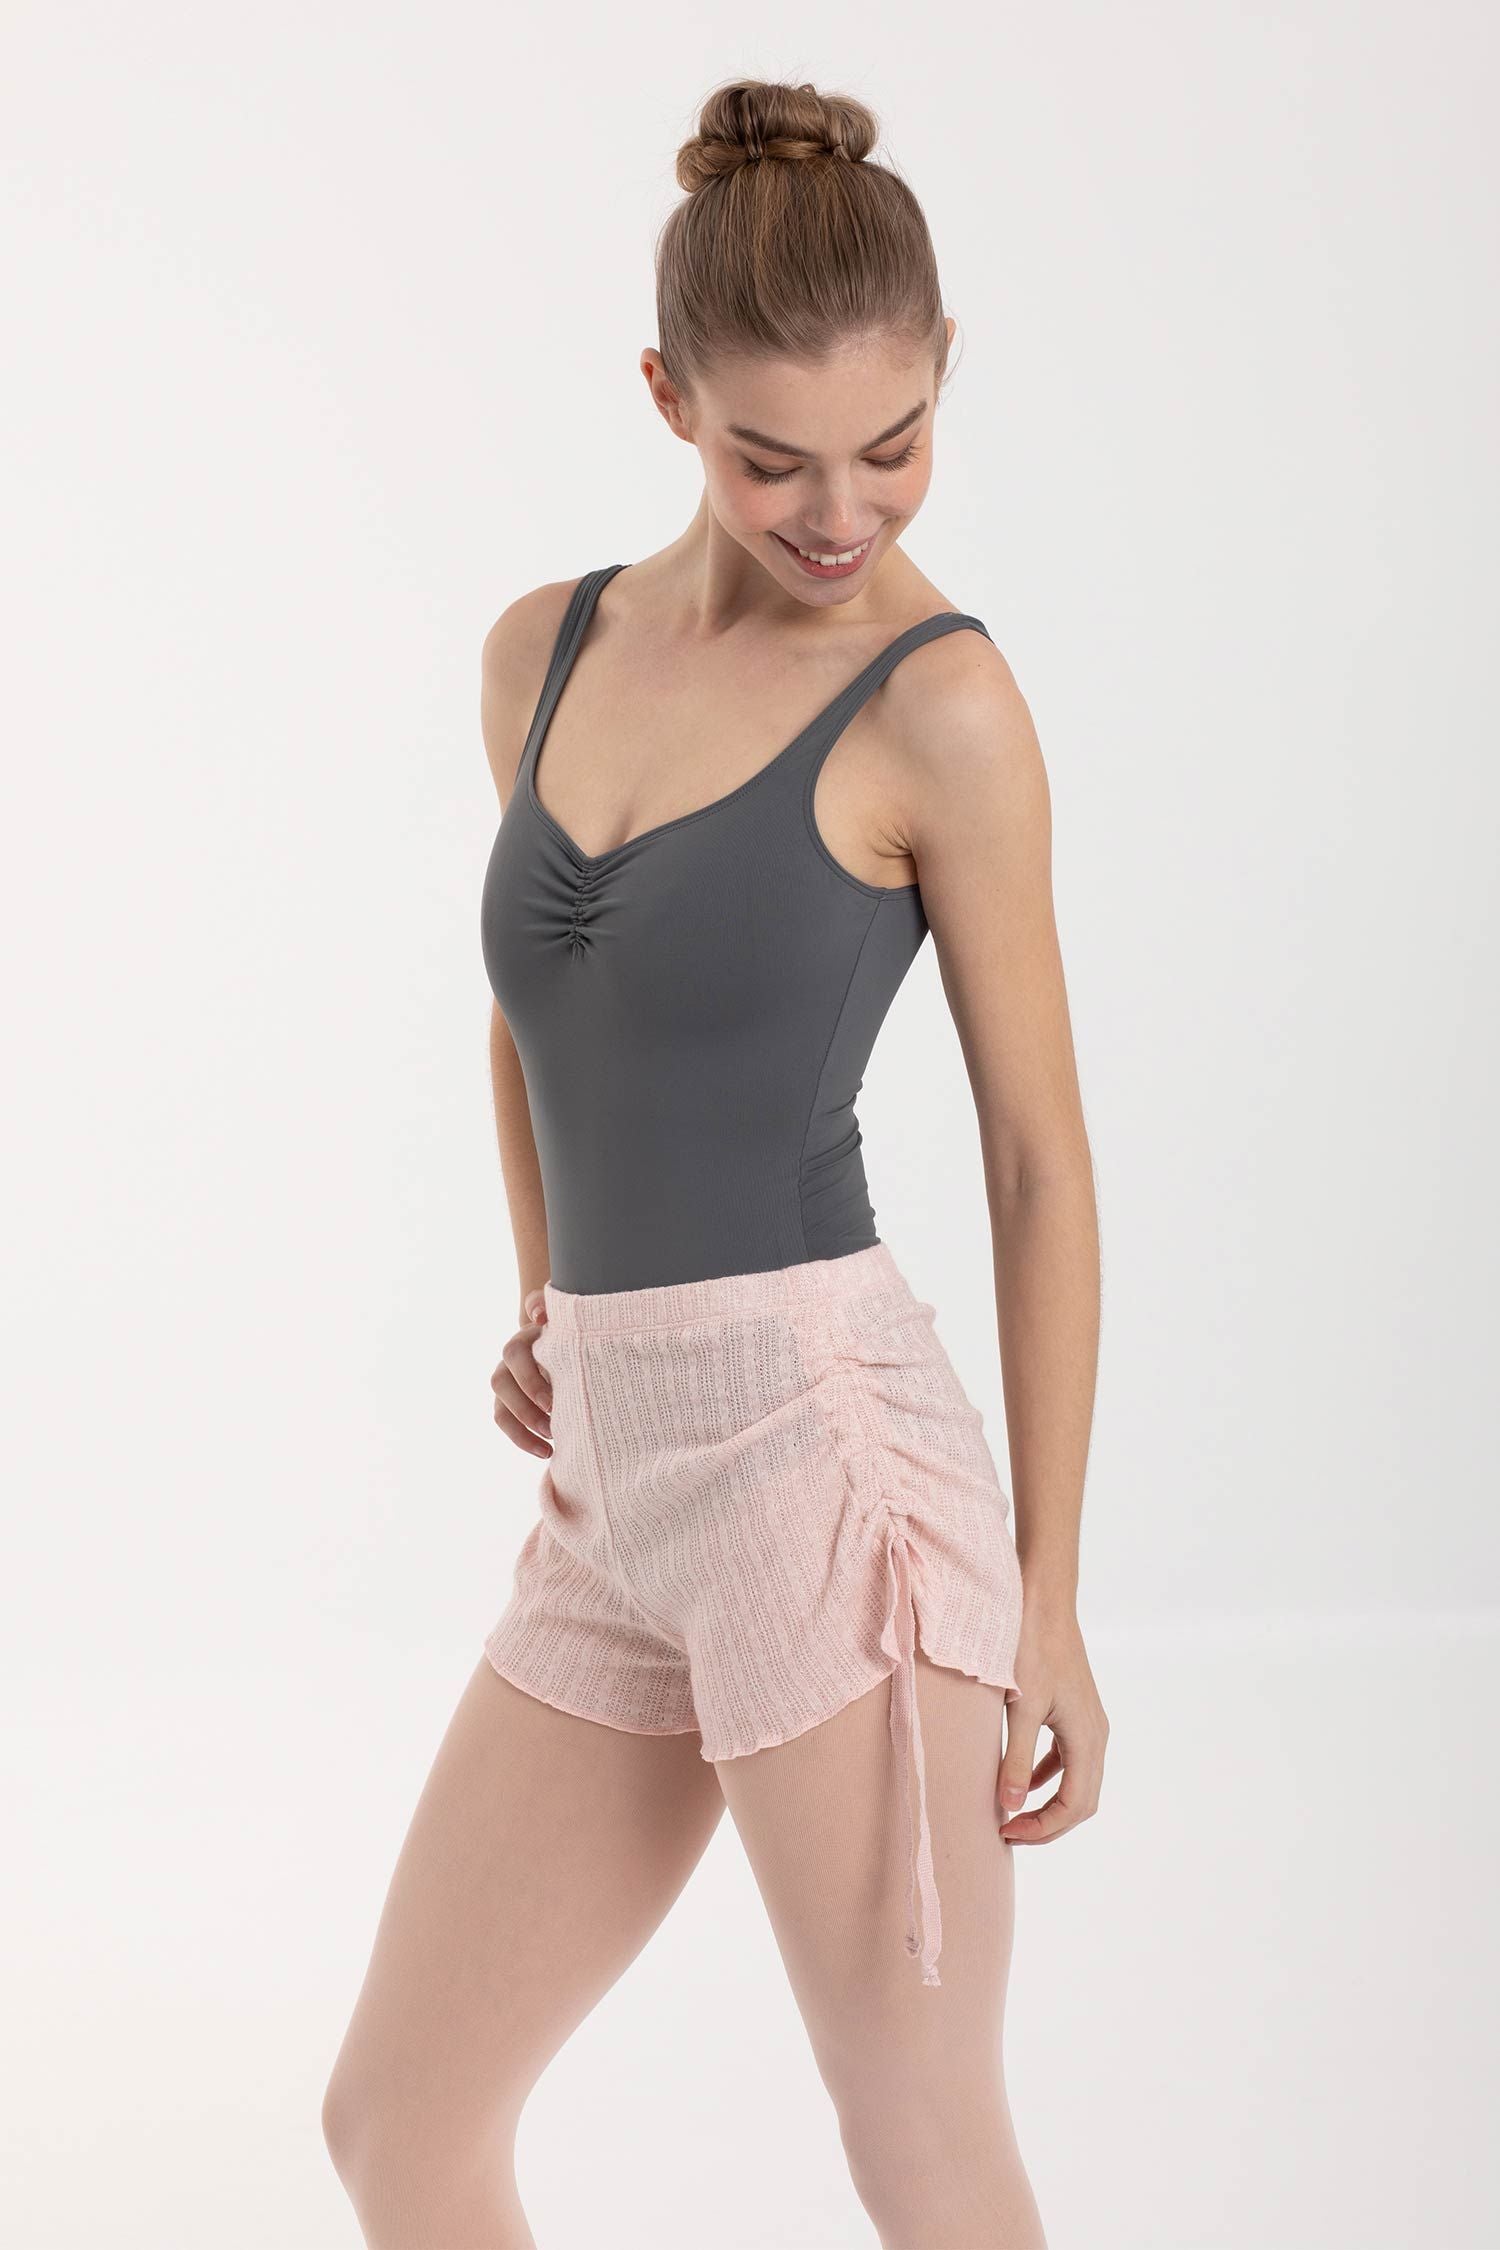 Studio Berta & 5523 – Intermezzo Shorts Station Rental - Dancewear The Knit